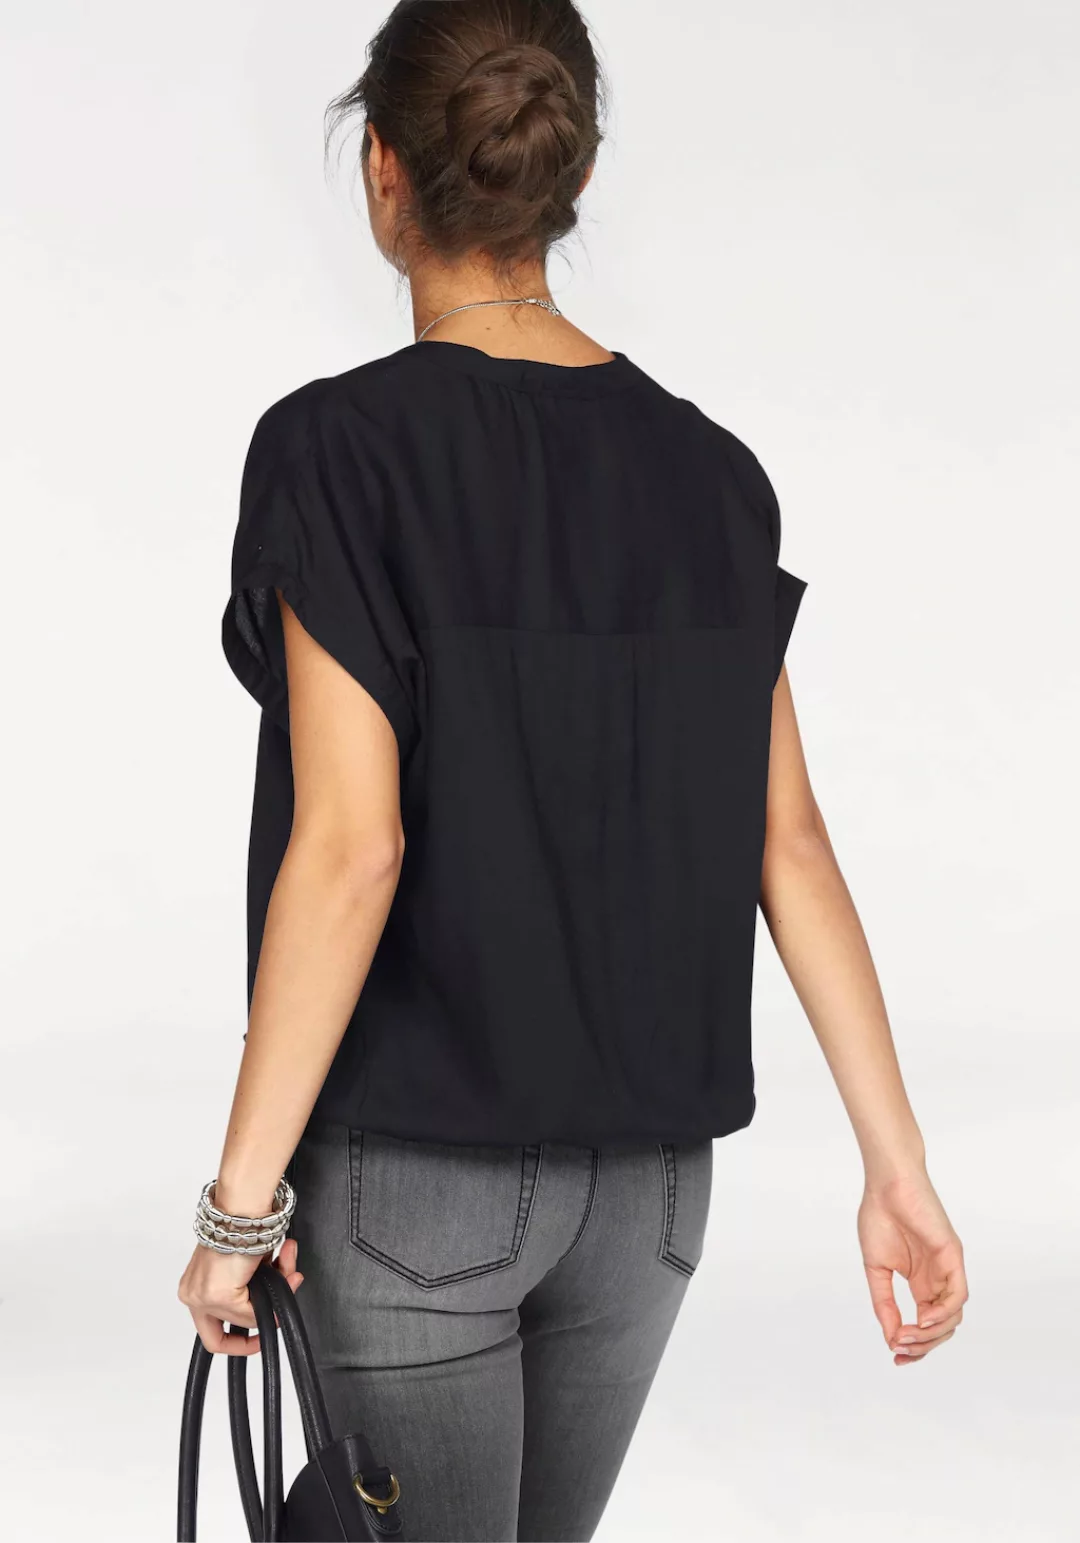 Boysen's Hemdbluse im Oversized-Style mit Ballonsaum günstig online kaufen